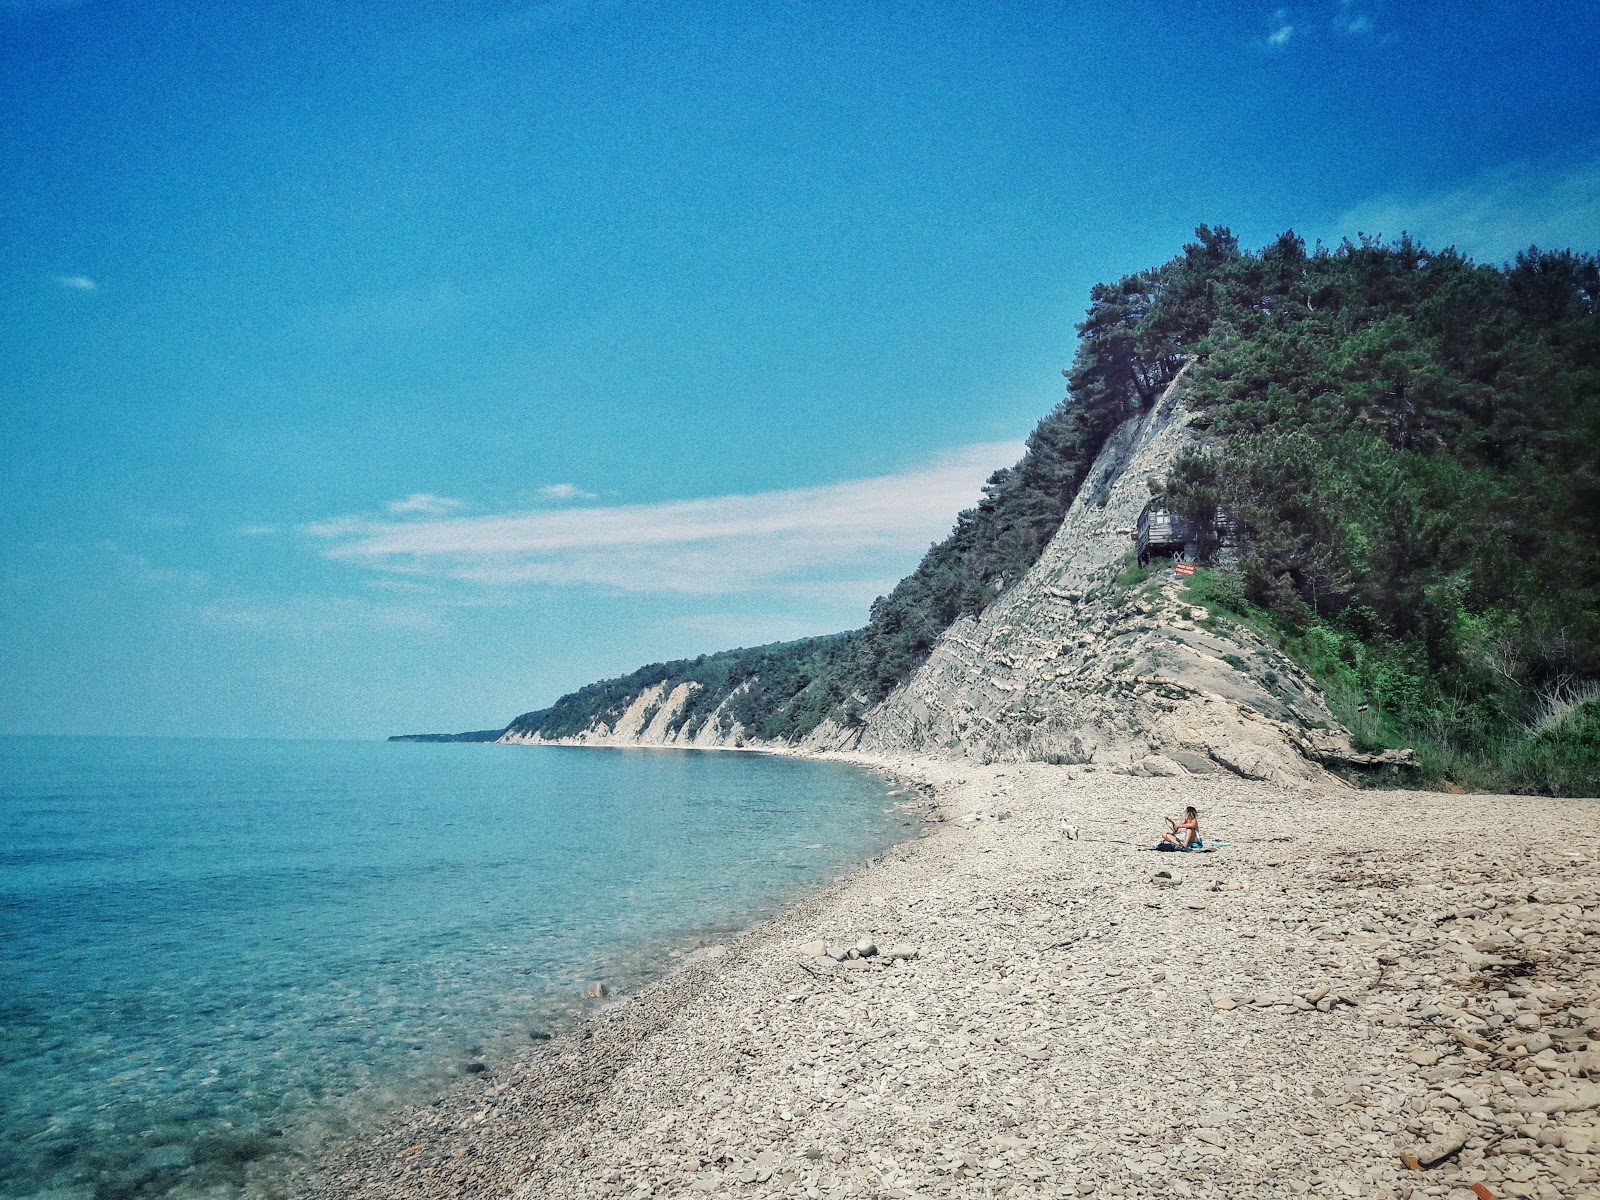 Photo de Nazarova dacha beach situé dans une zone naturelle